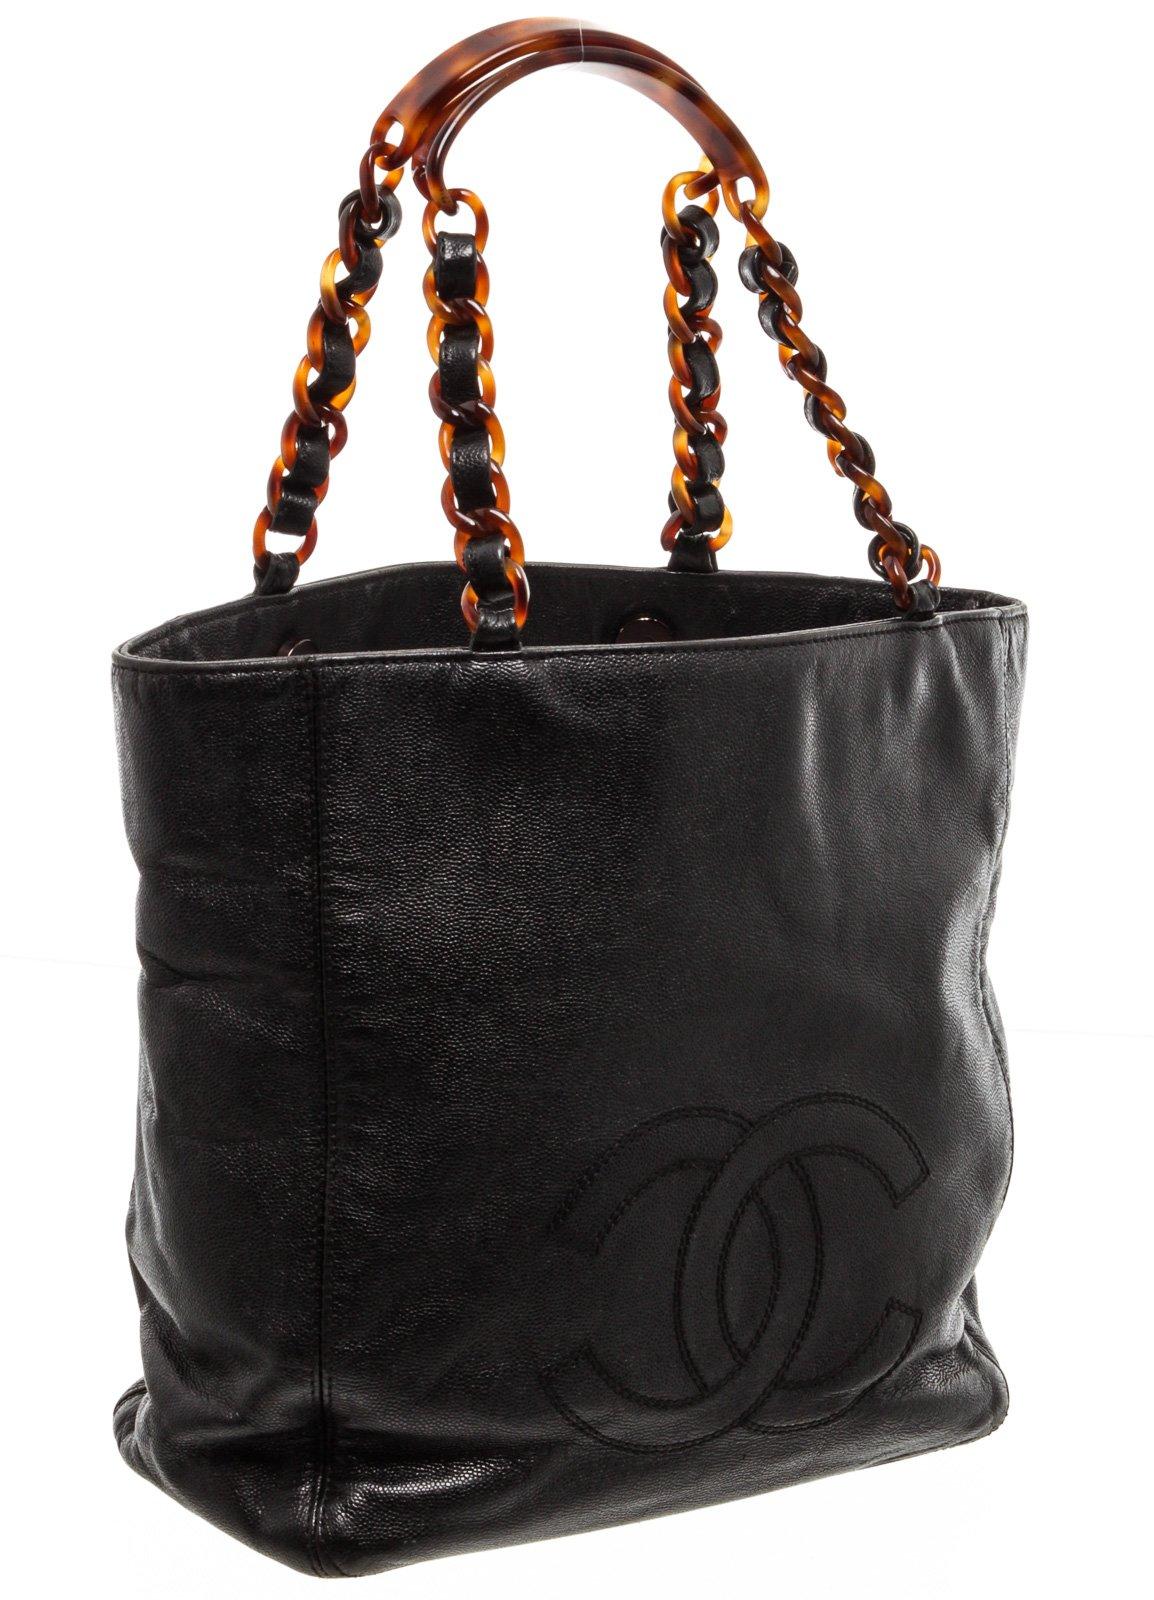 Women's Chanel Black Caviar Leather Tortoise Shell Tote Bag